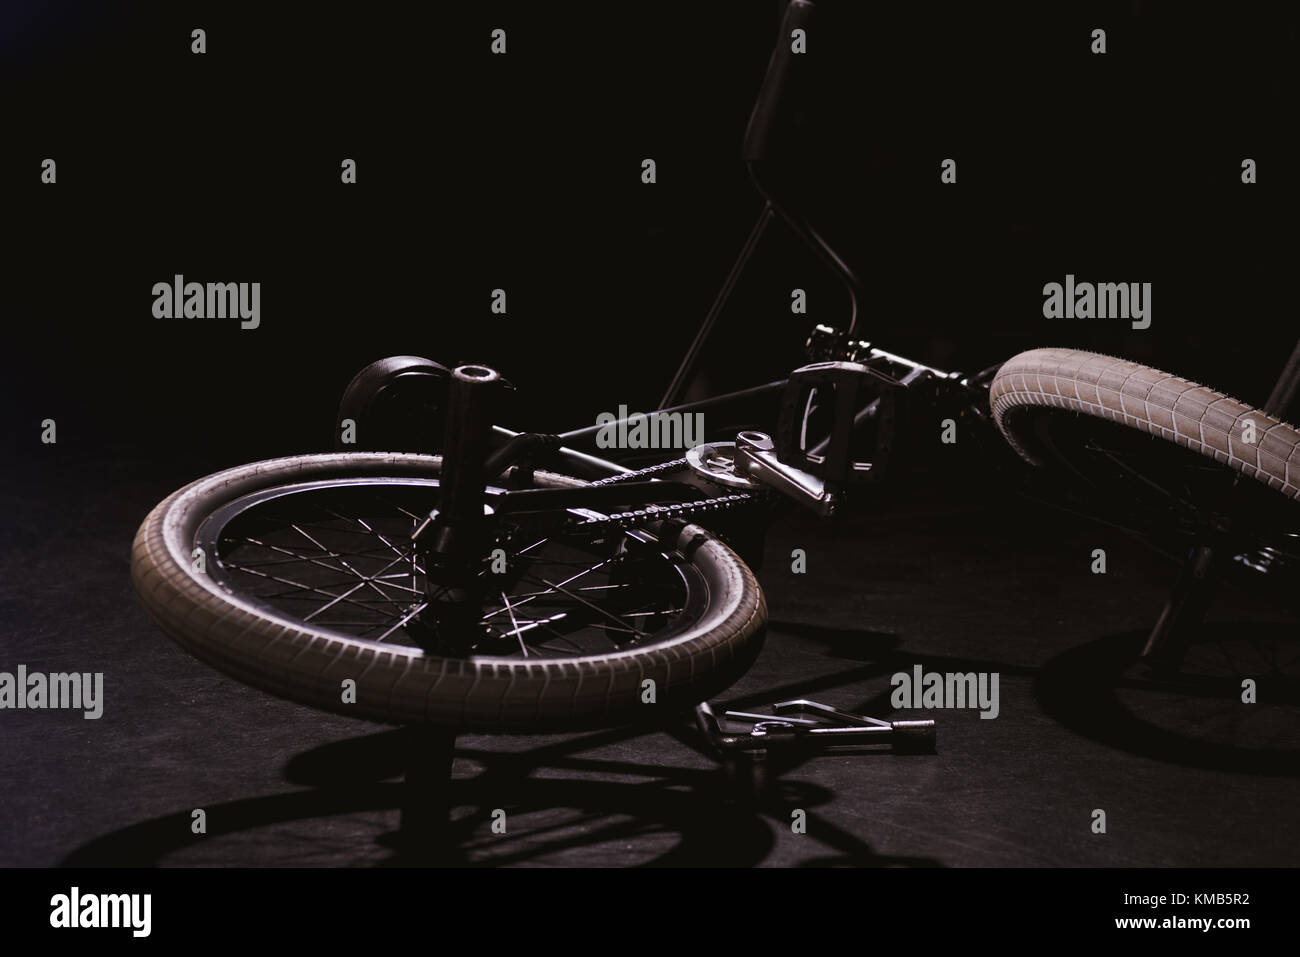 bmx bicycle Stock Photo